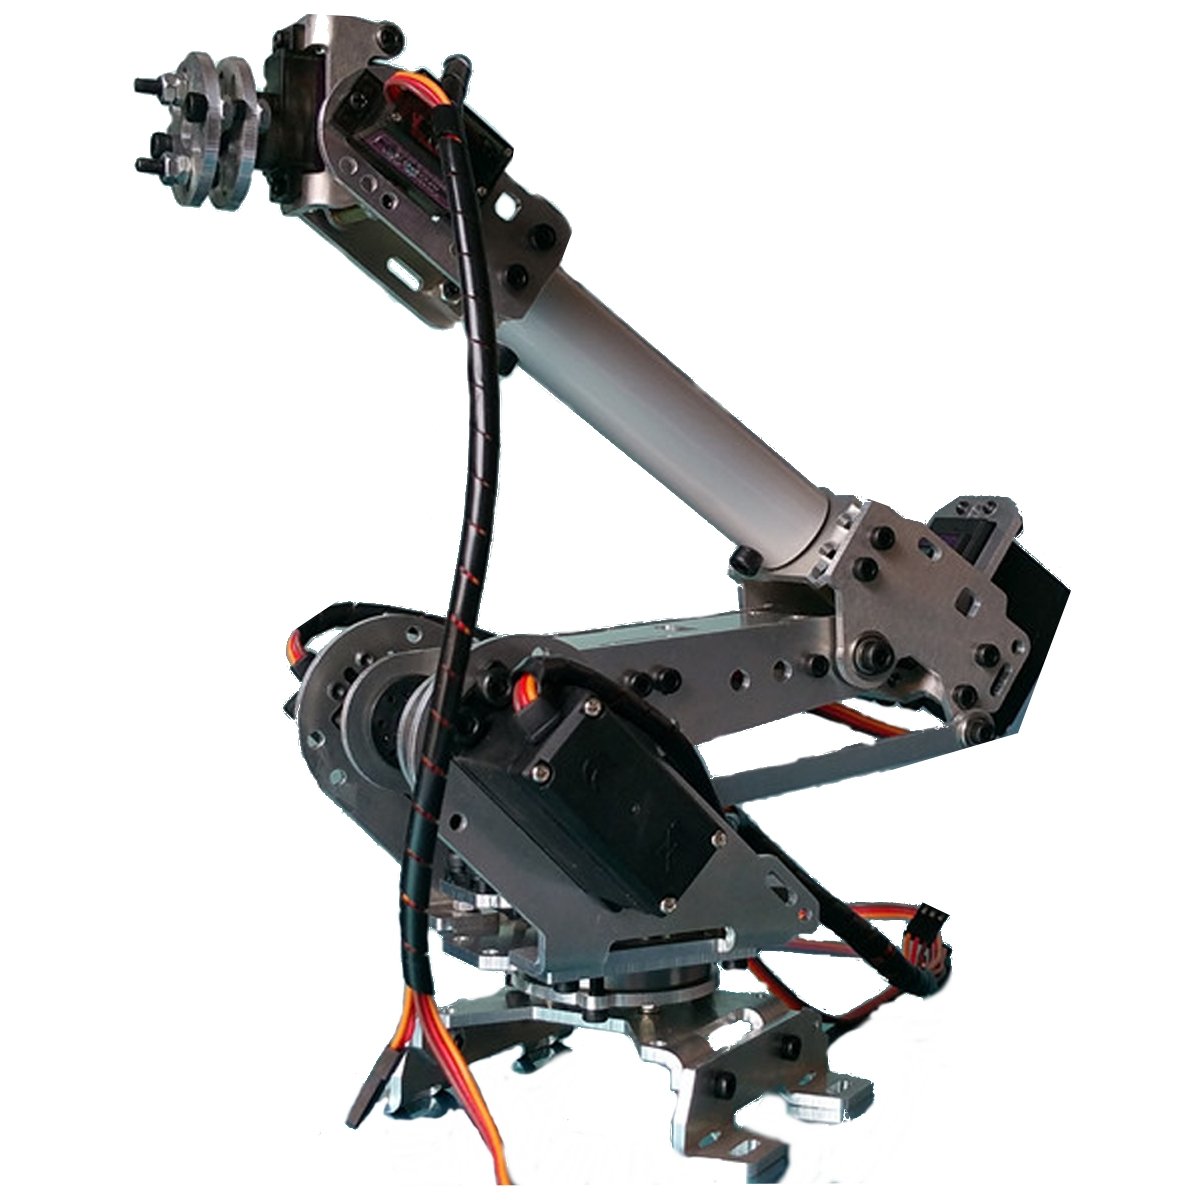 6DOF Mechanical Robot Arm Claw With Servos For Robotics Arduino DIY Kit 2